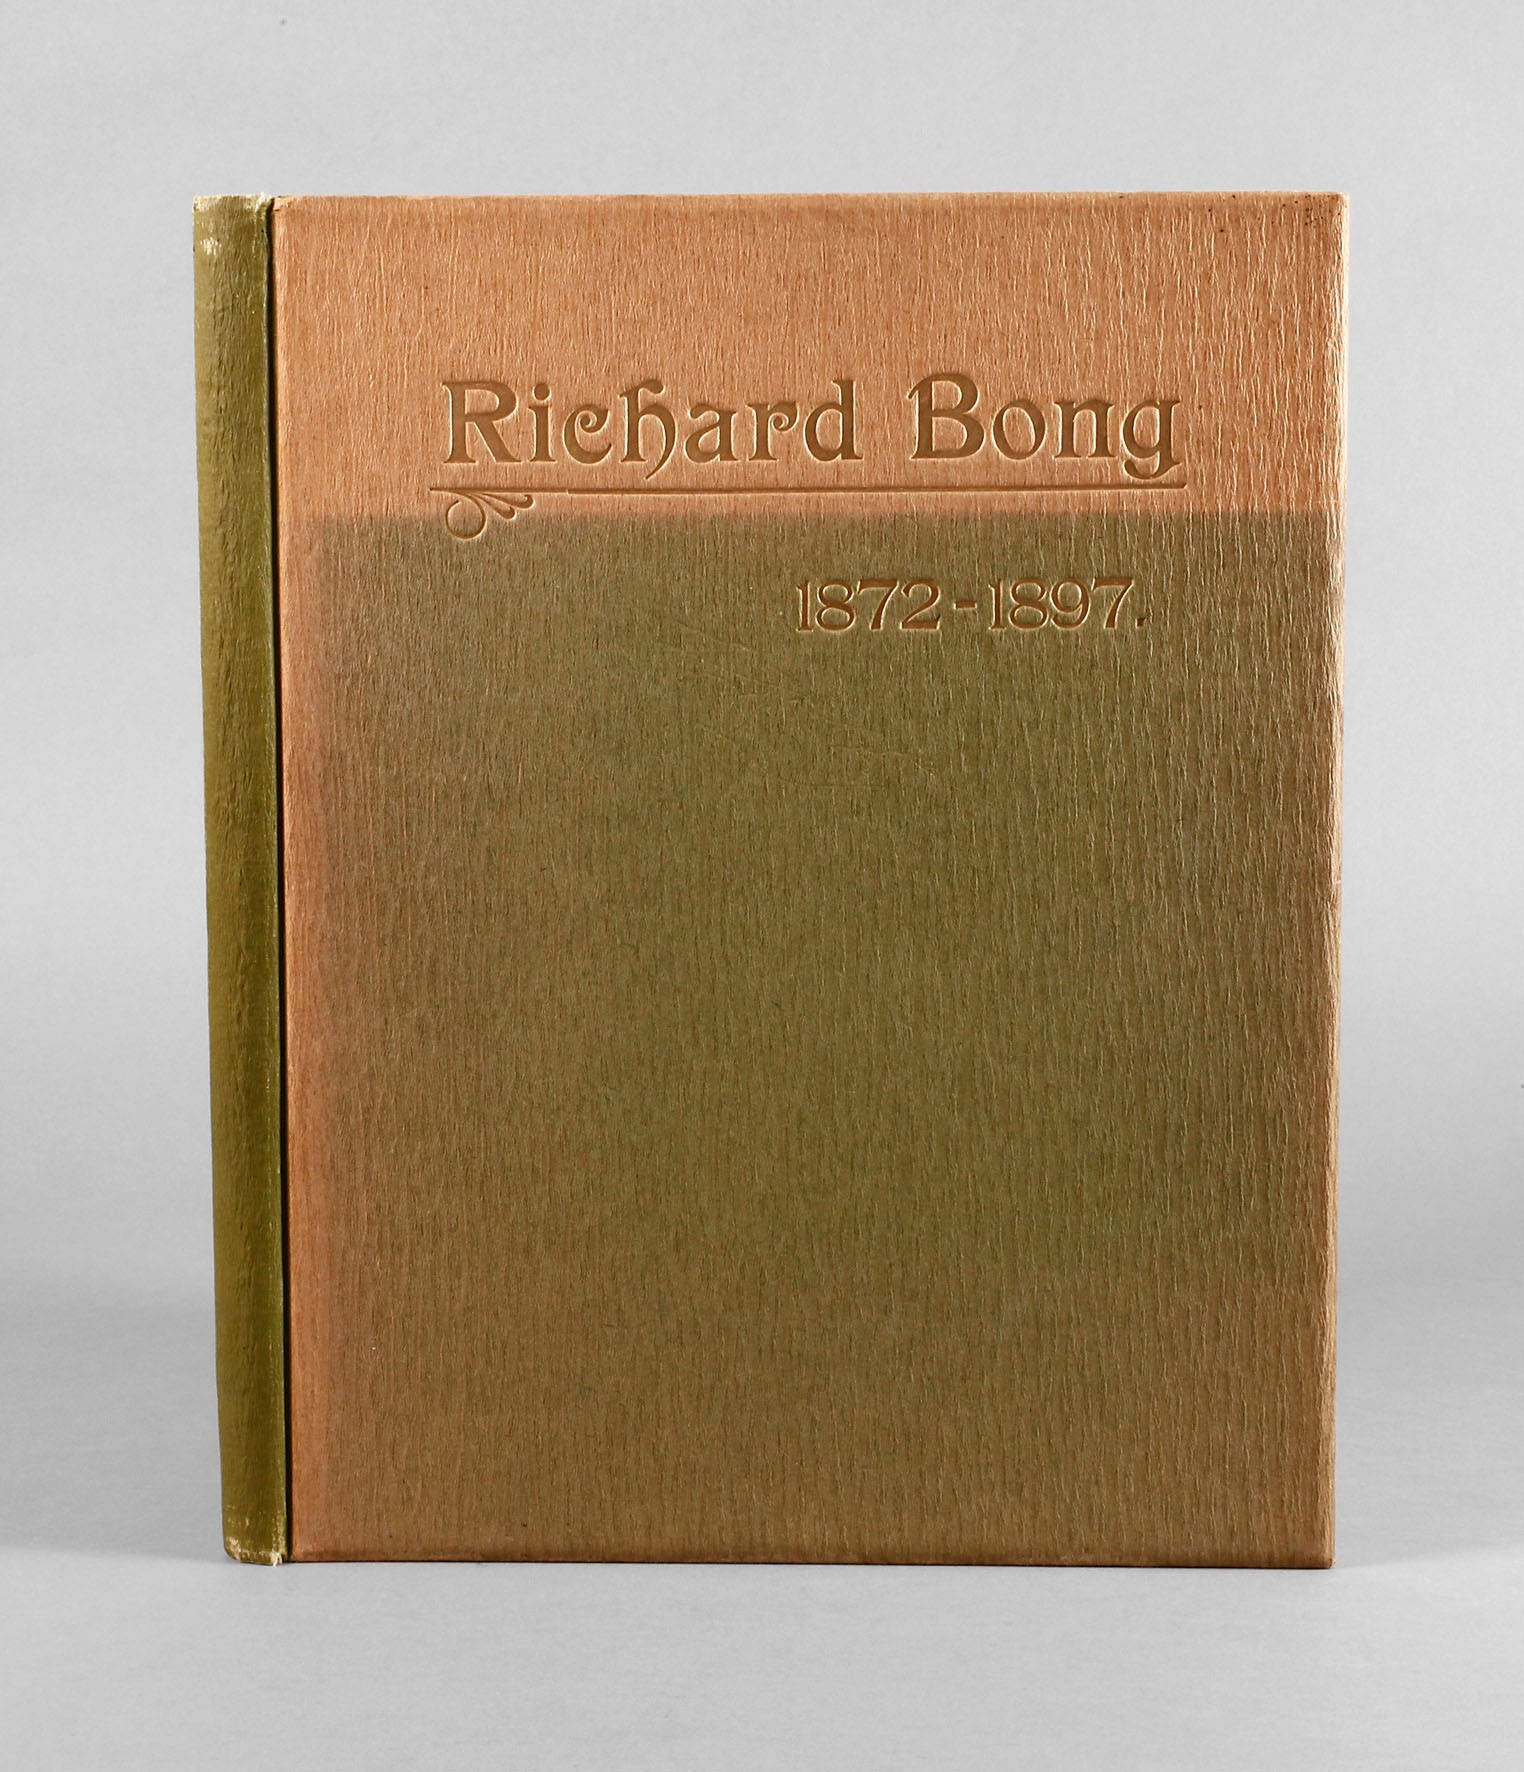 Festschrift Richard Bong